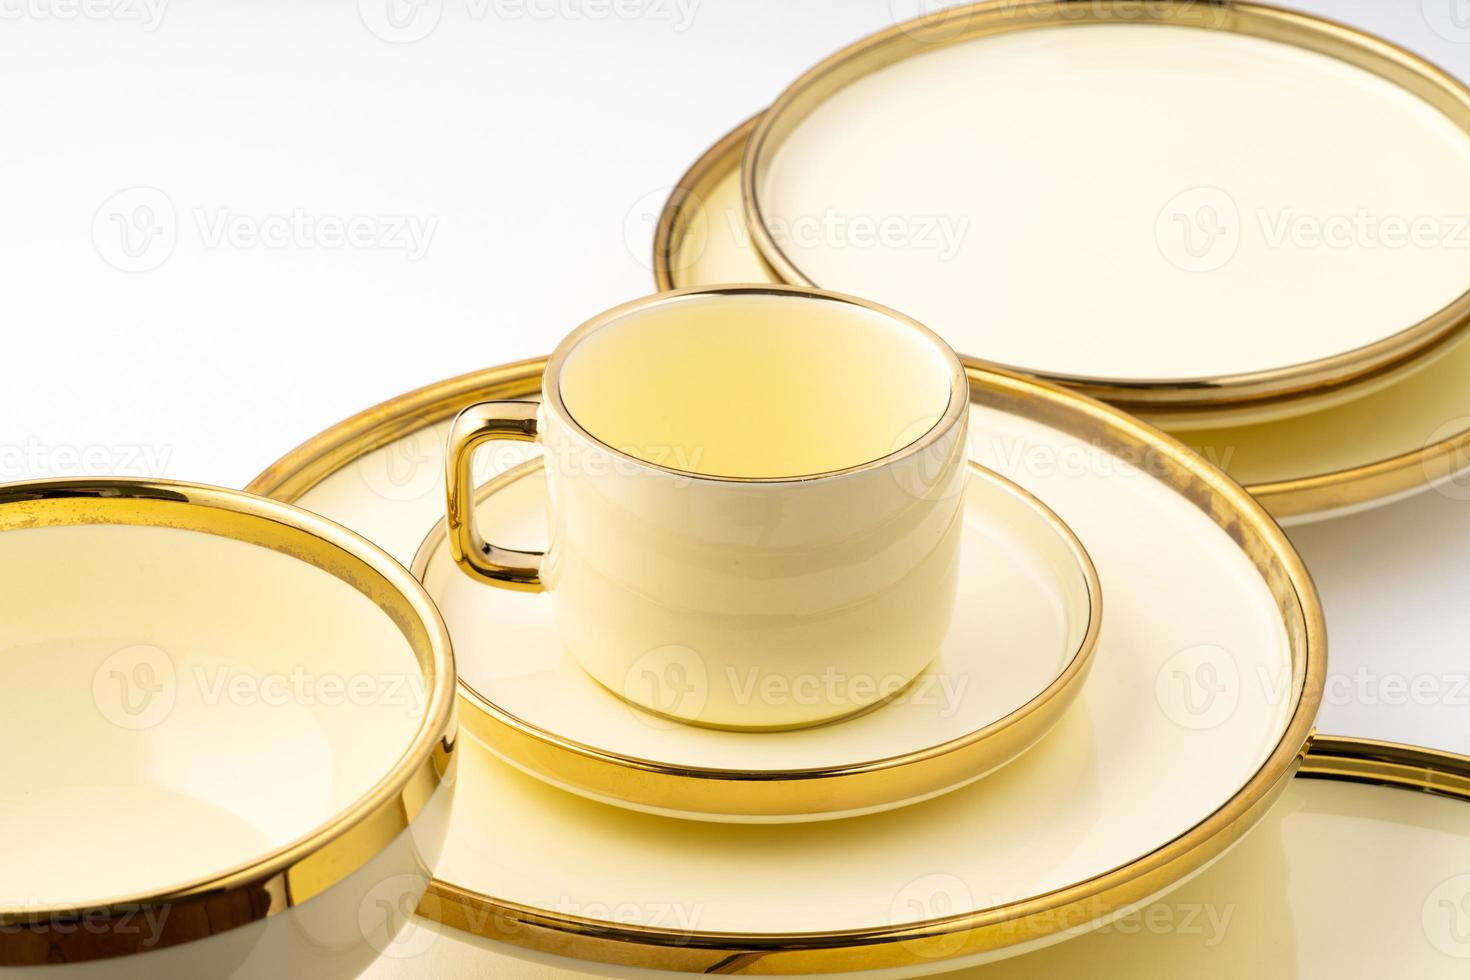 A closeup shot of golden luxury ceramic kitchen utensils on a white background photo